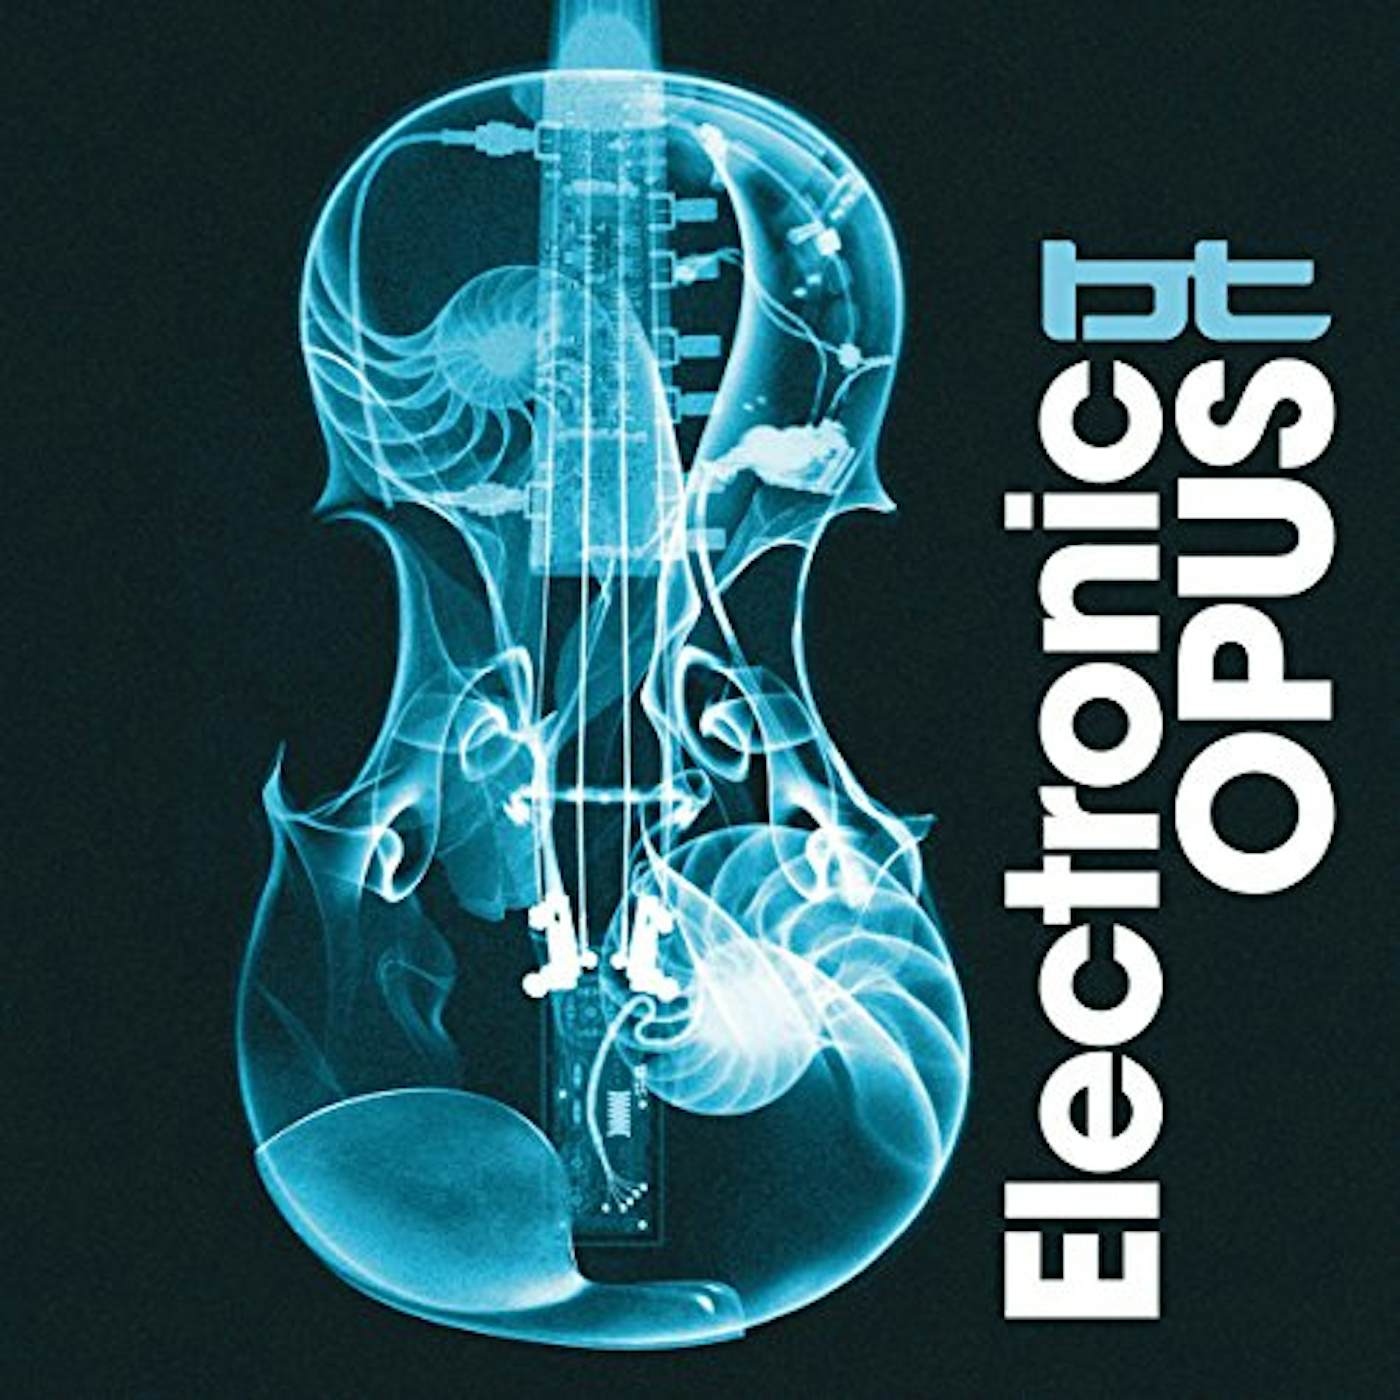 BT ELECTRONIC OPUS CD